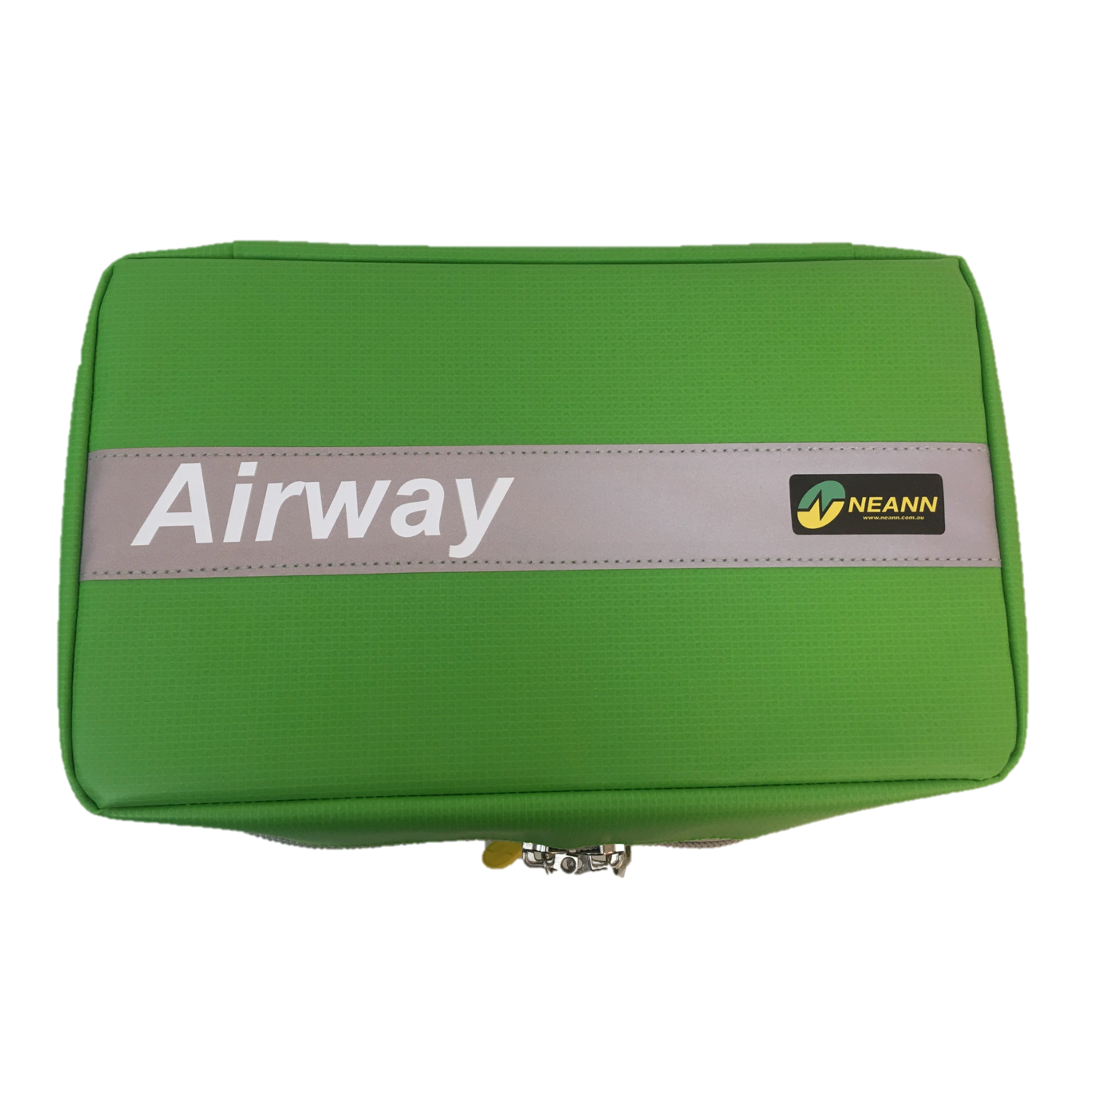 Neann 3/4 Airway Bag Only - Green